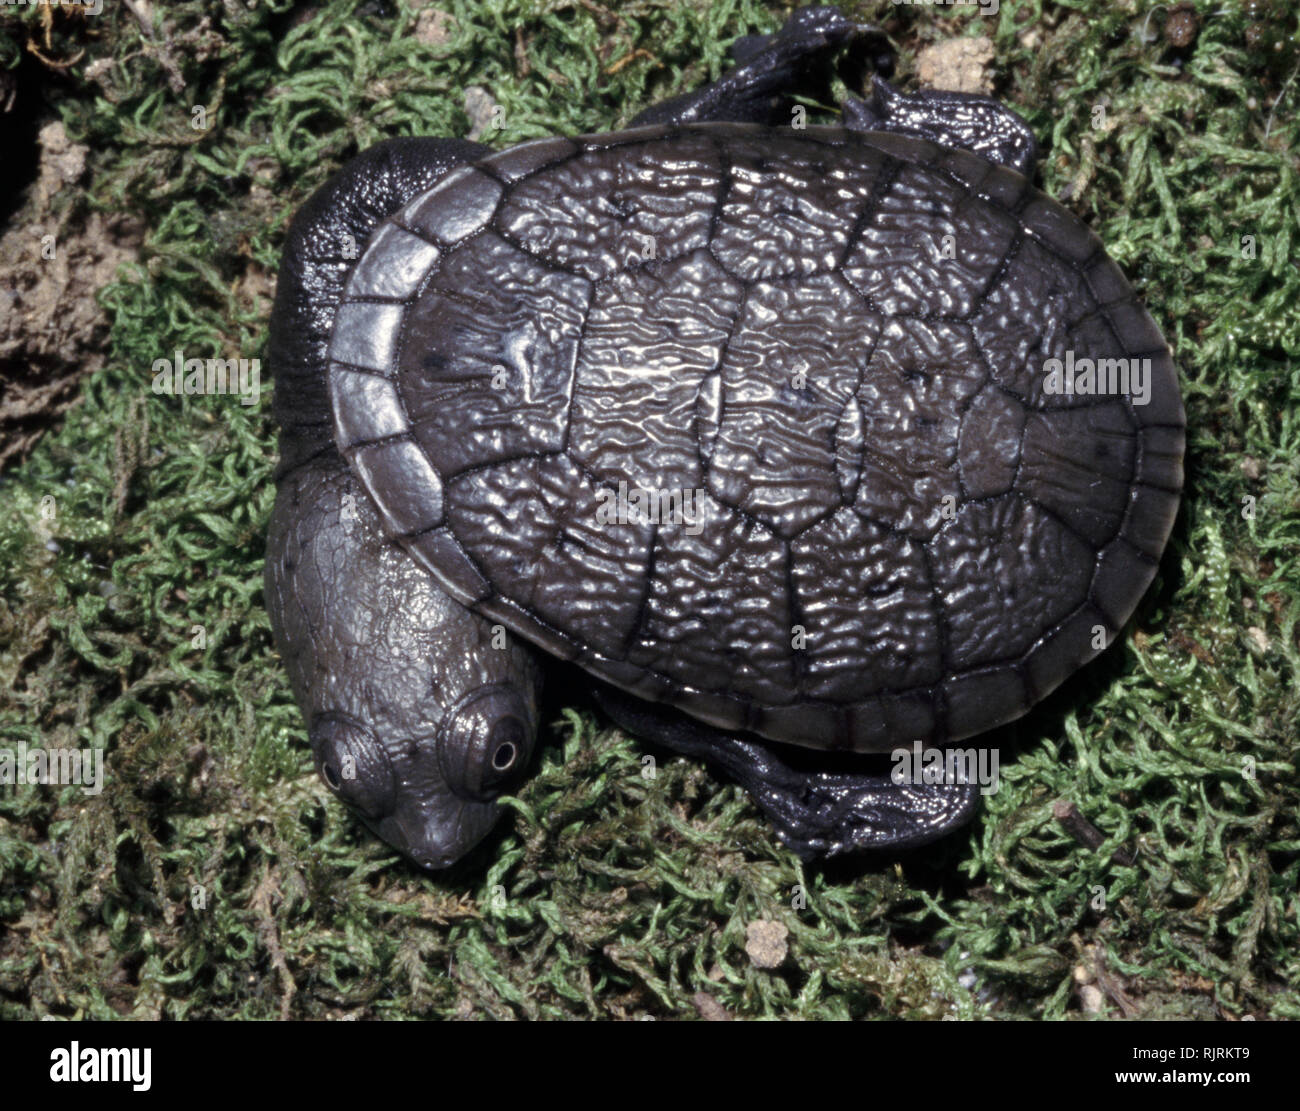 Young specimen of Common or Eastern long-necked turtle (Chelodina longicollis) Stock Photo